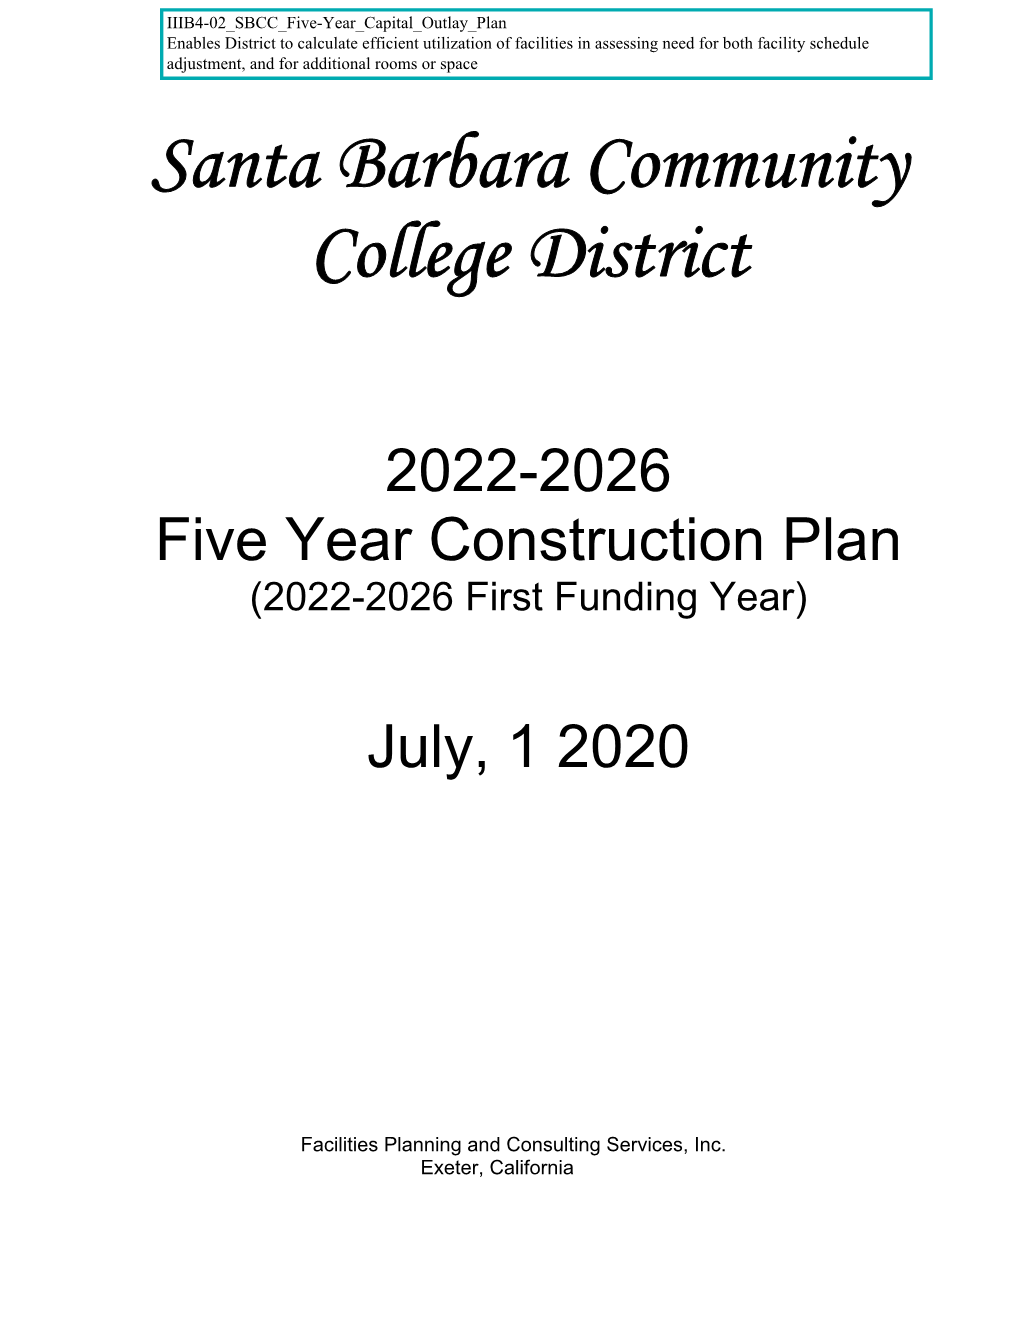 Santa Barbara Community College District